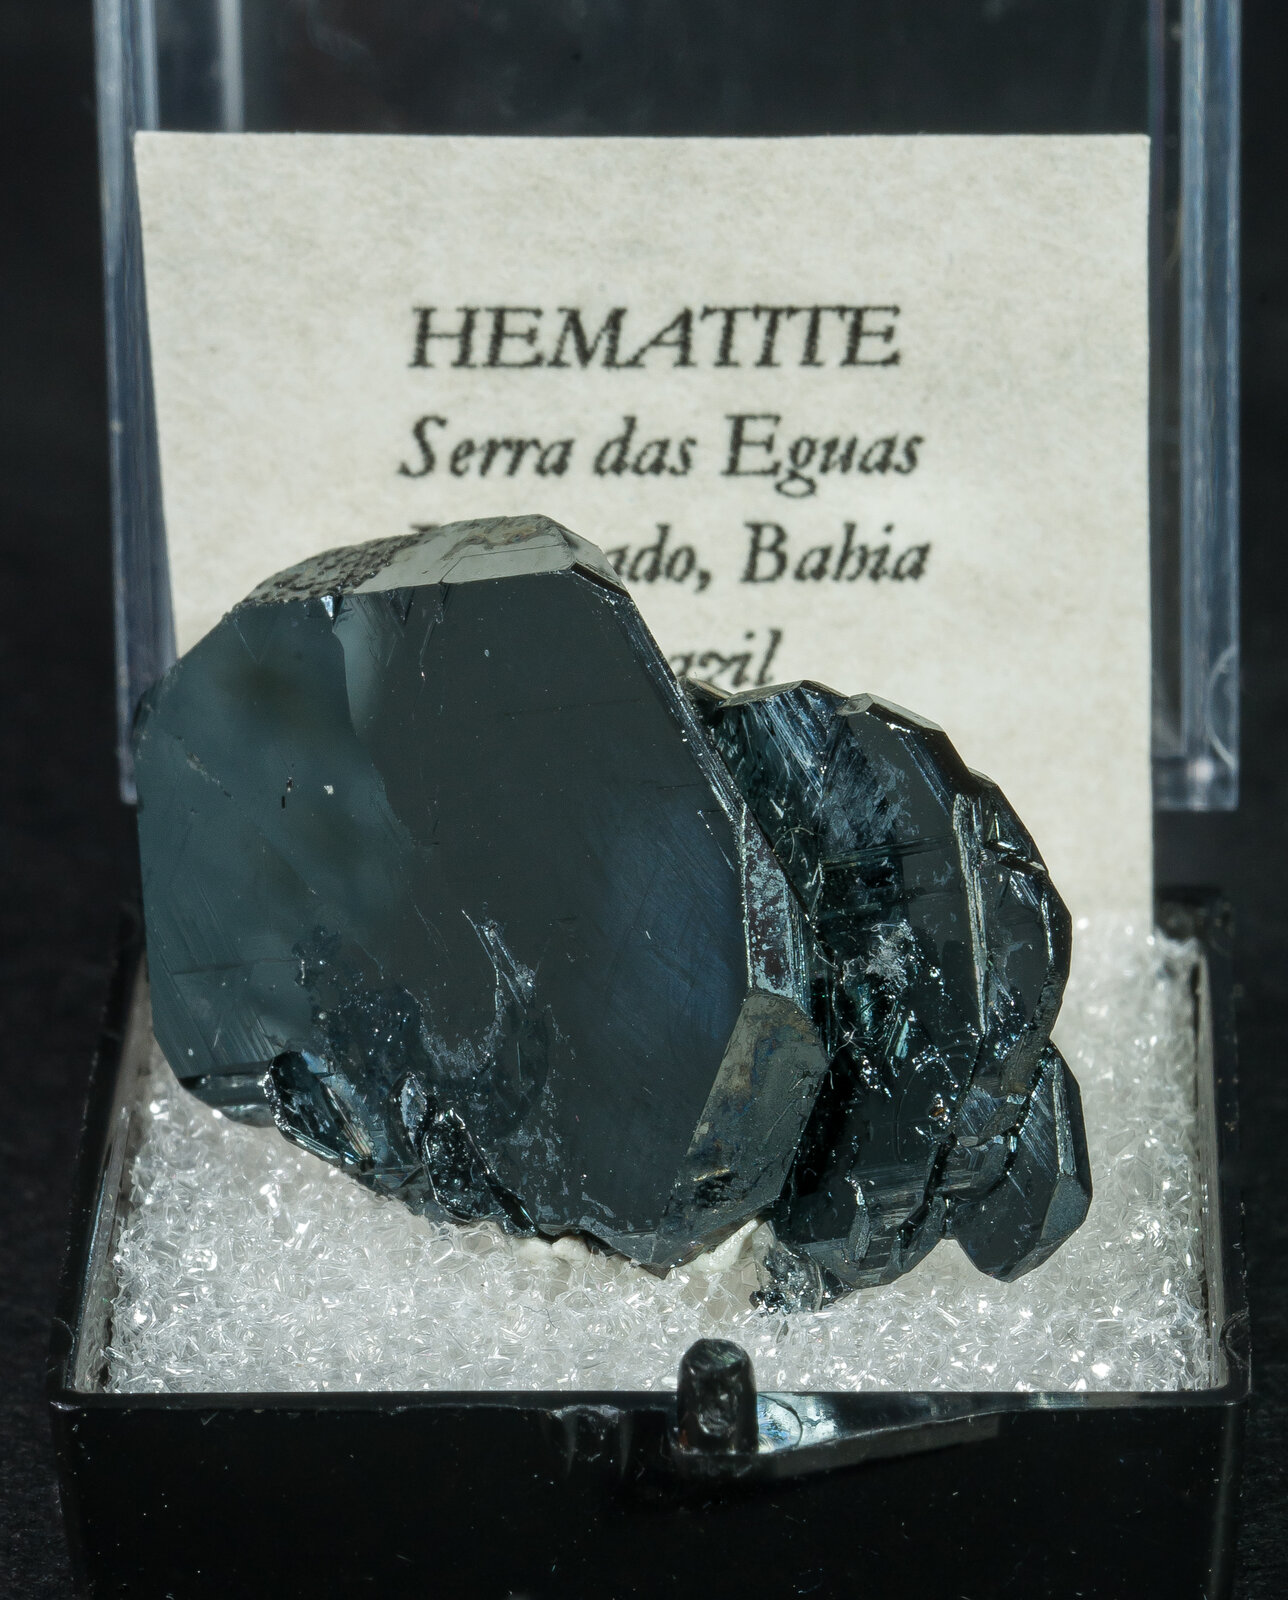 specimens/s_imagesAN9/Hematite-TVR46AN9f.jpg